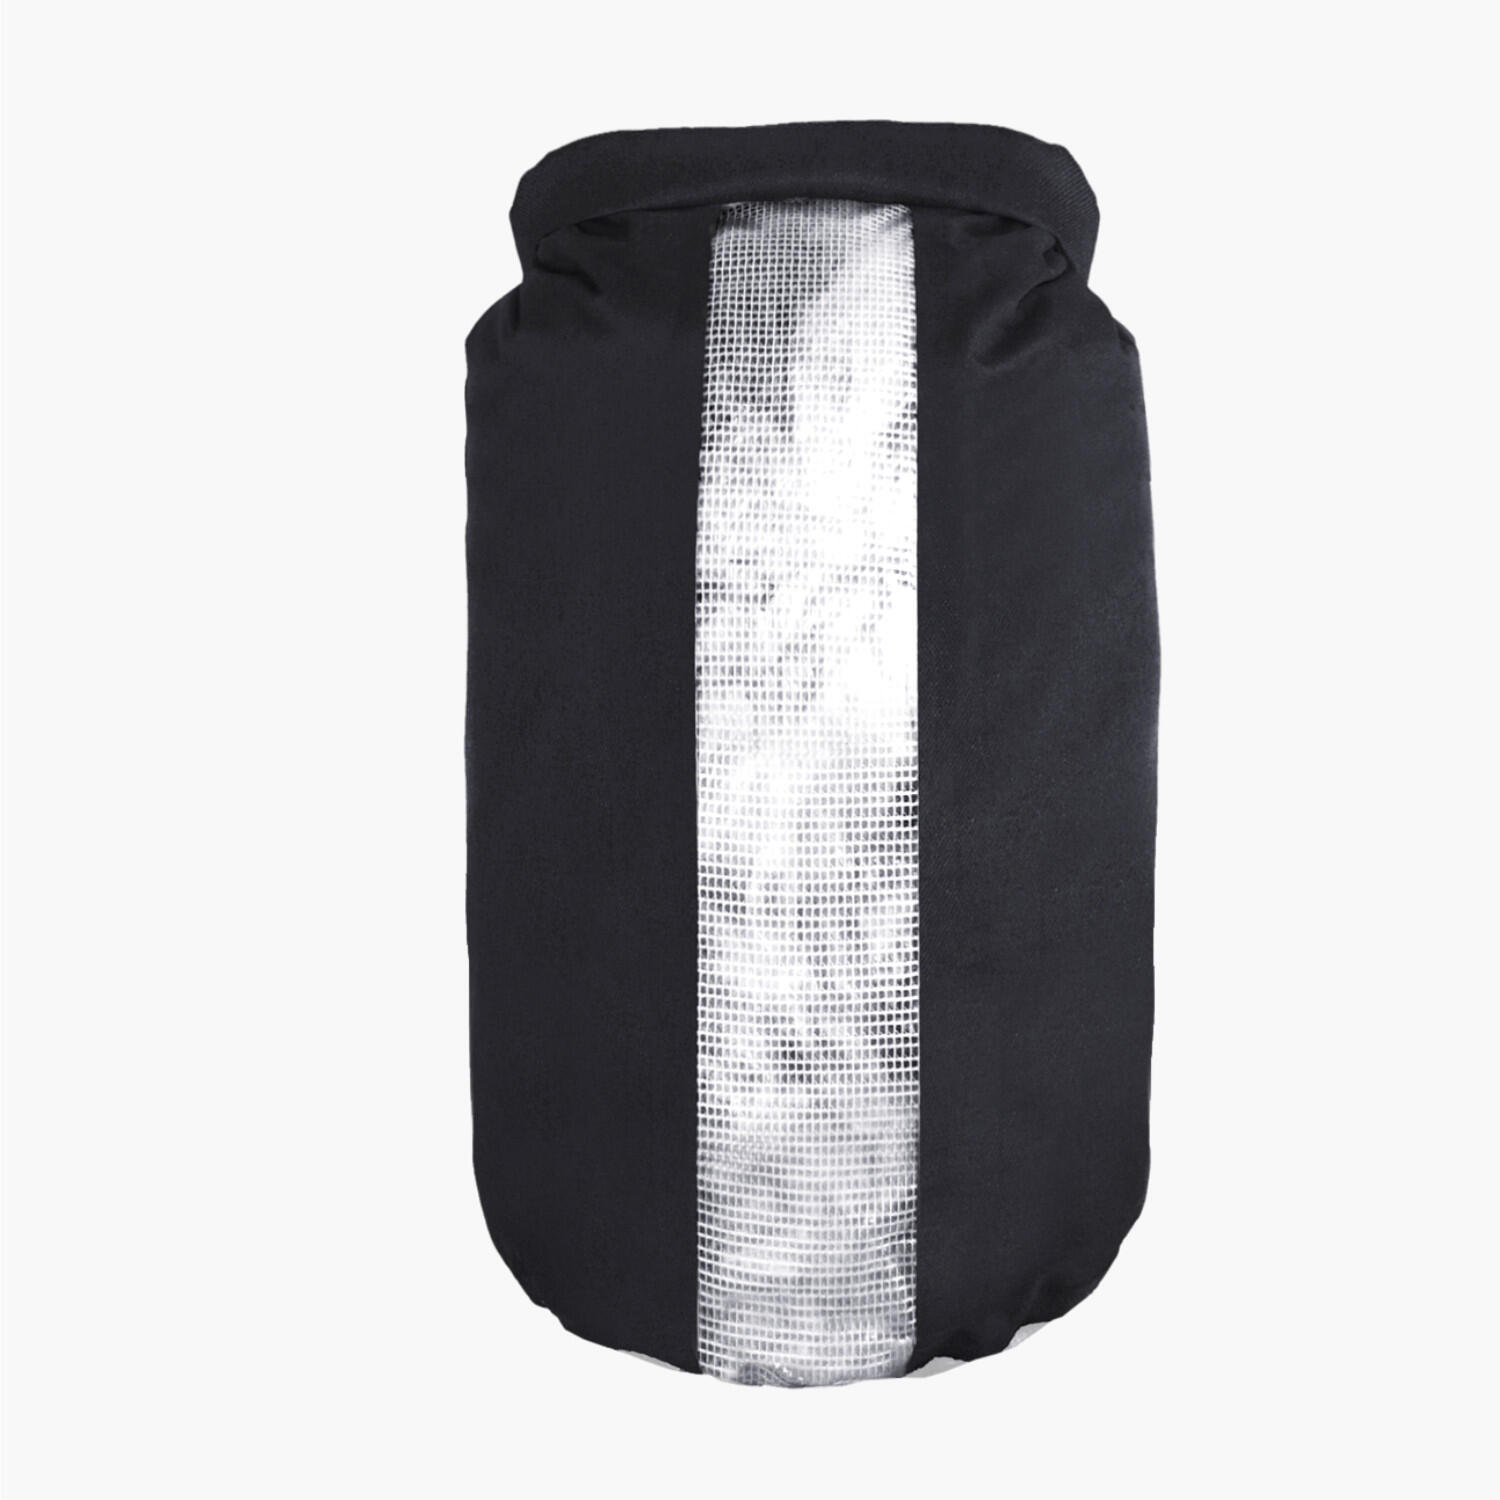 Lomo 5L Dry Bag - Black with Window 5/7